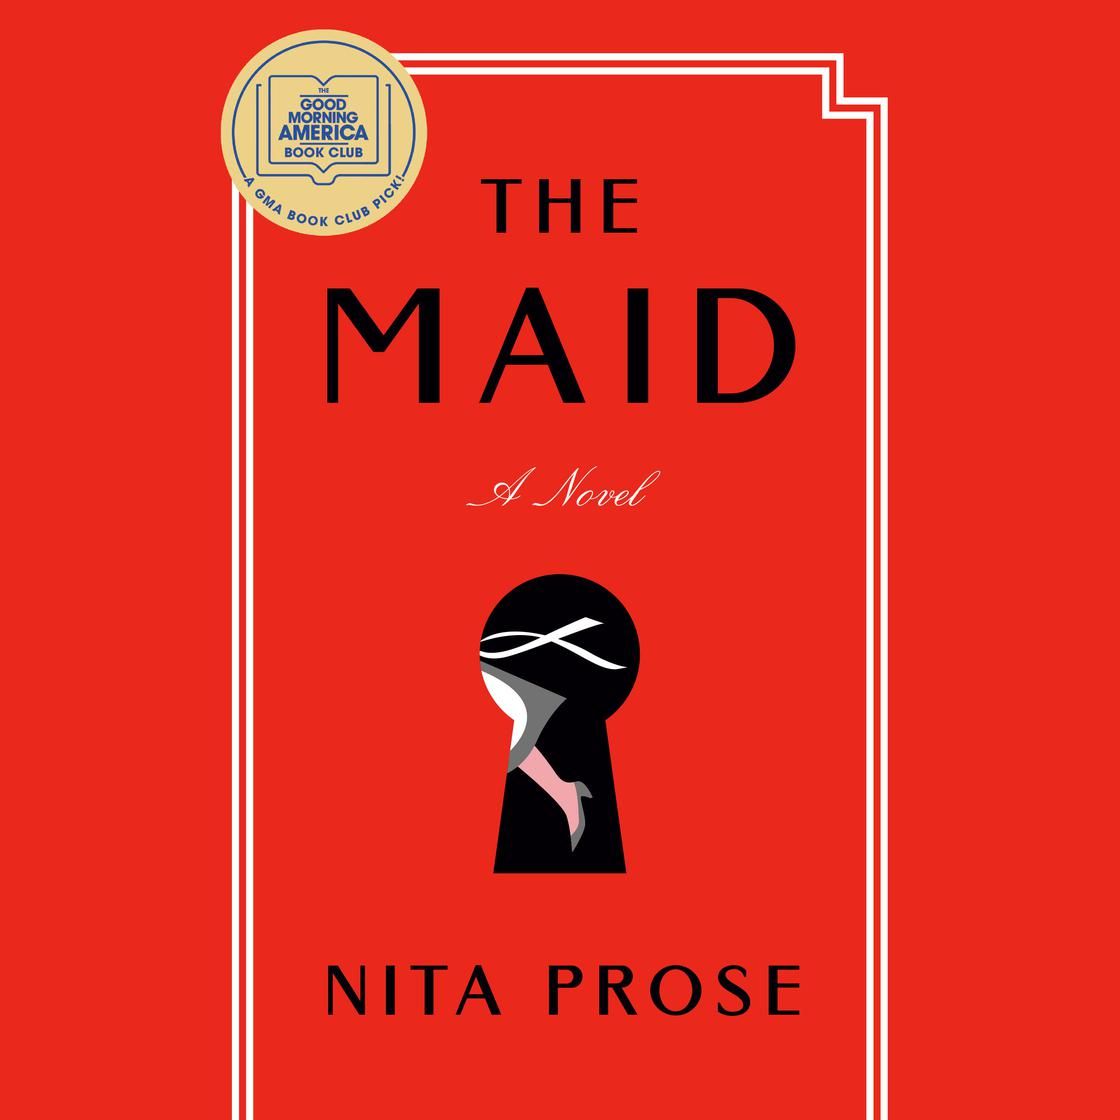 The Maid | Libro.fm (US)